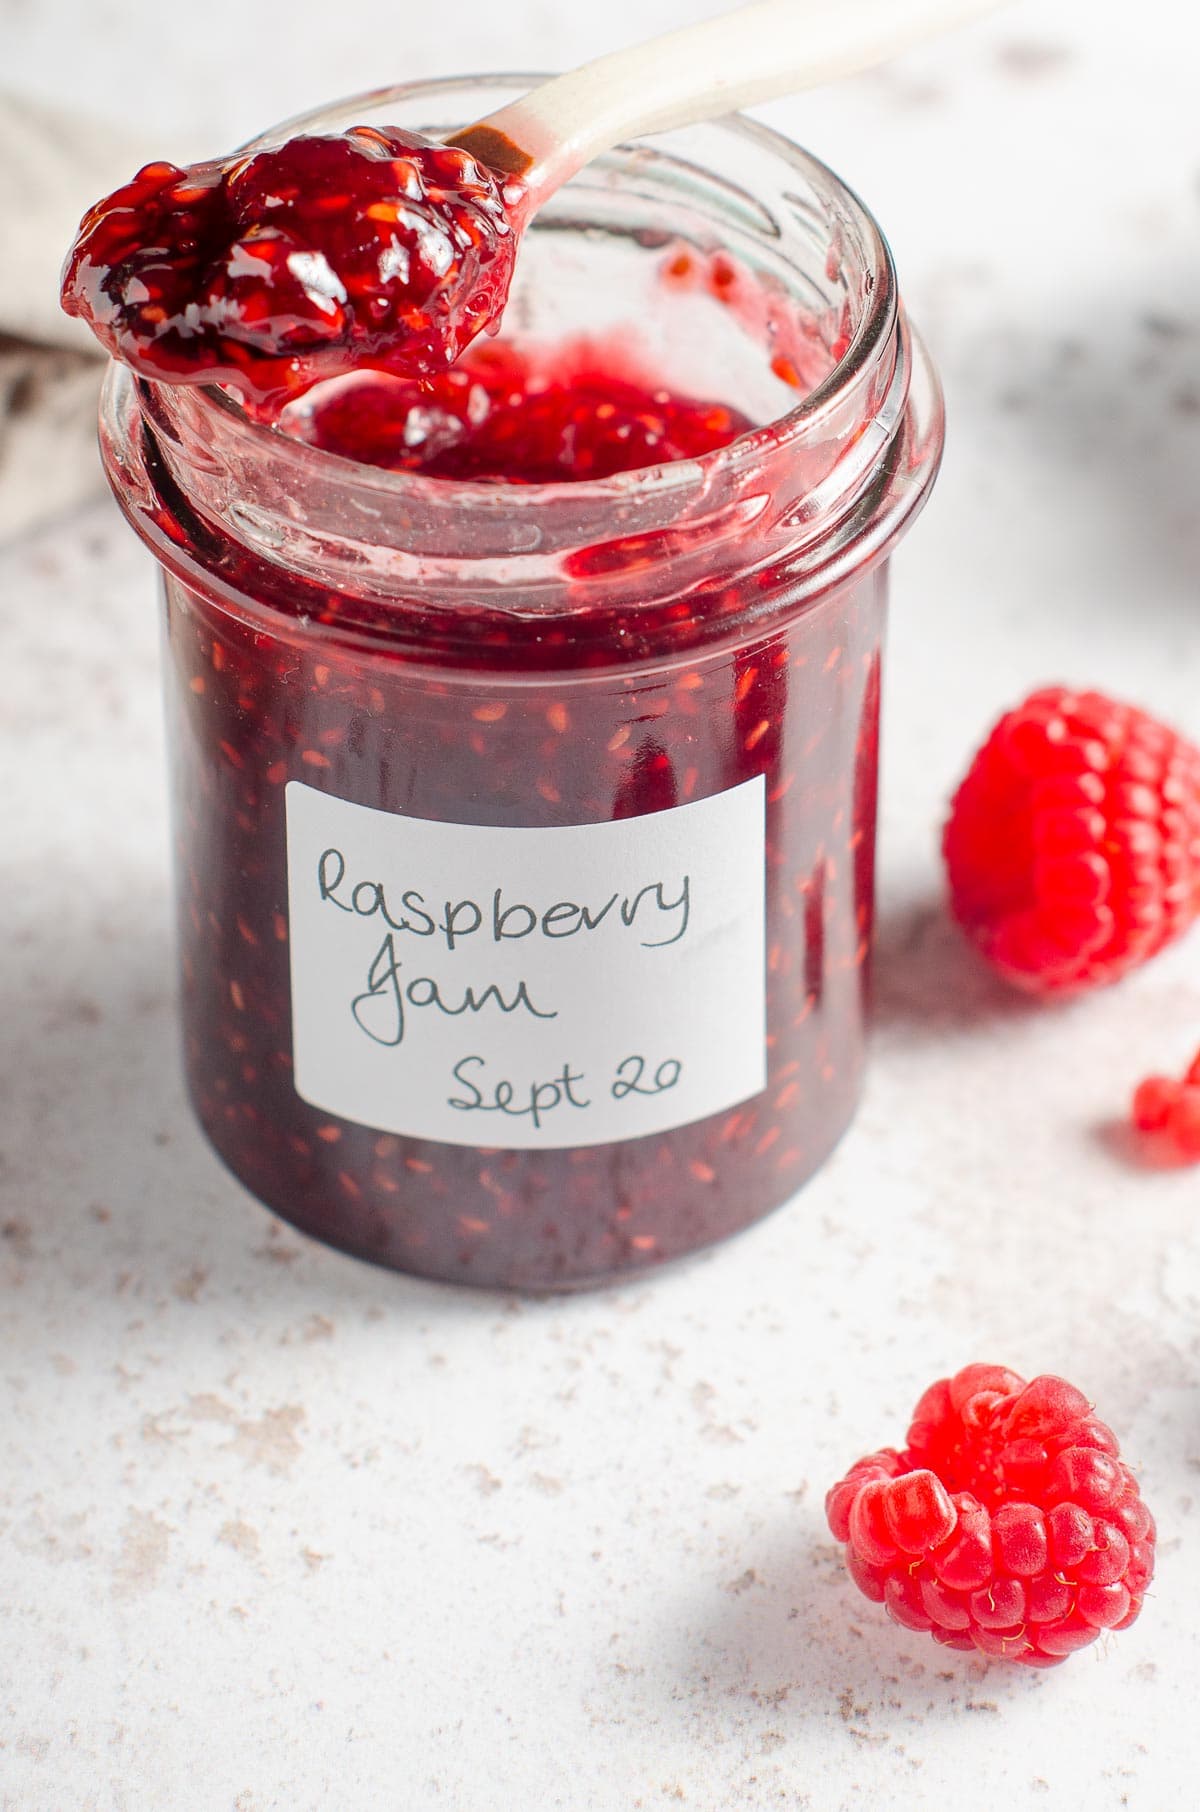 Scottish raspberry jam | Lost in Food